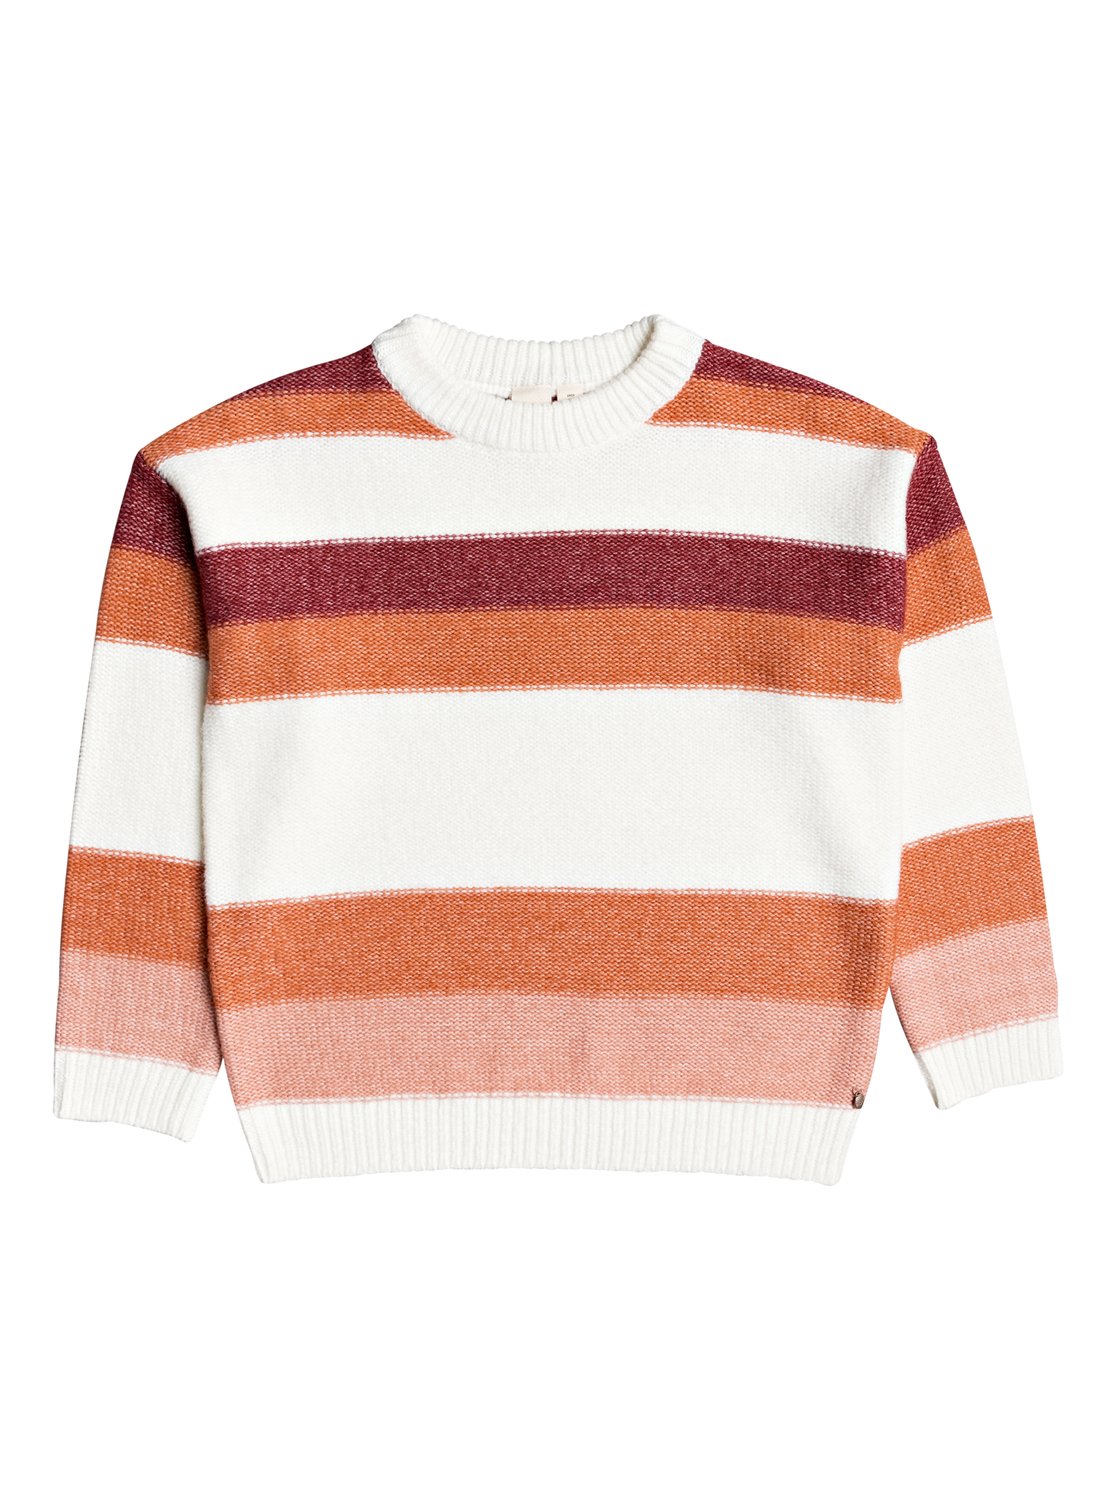 roxy sweater